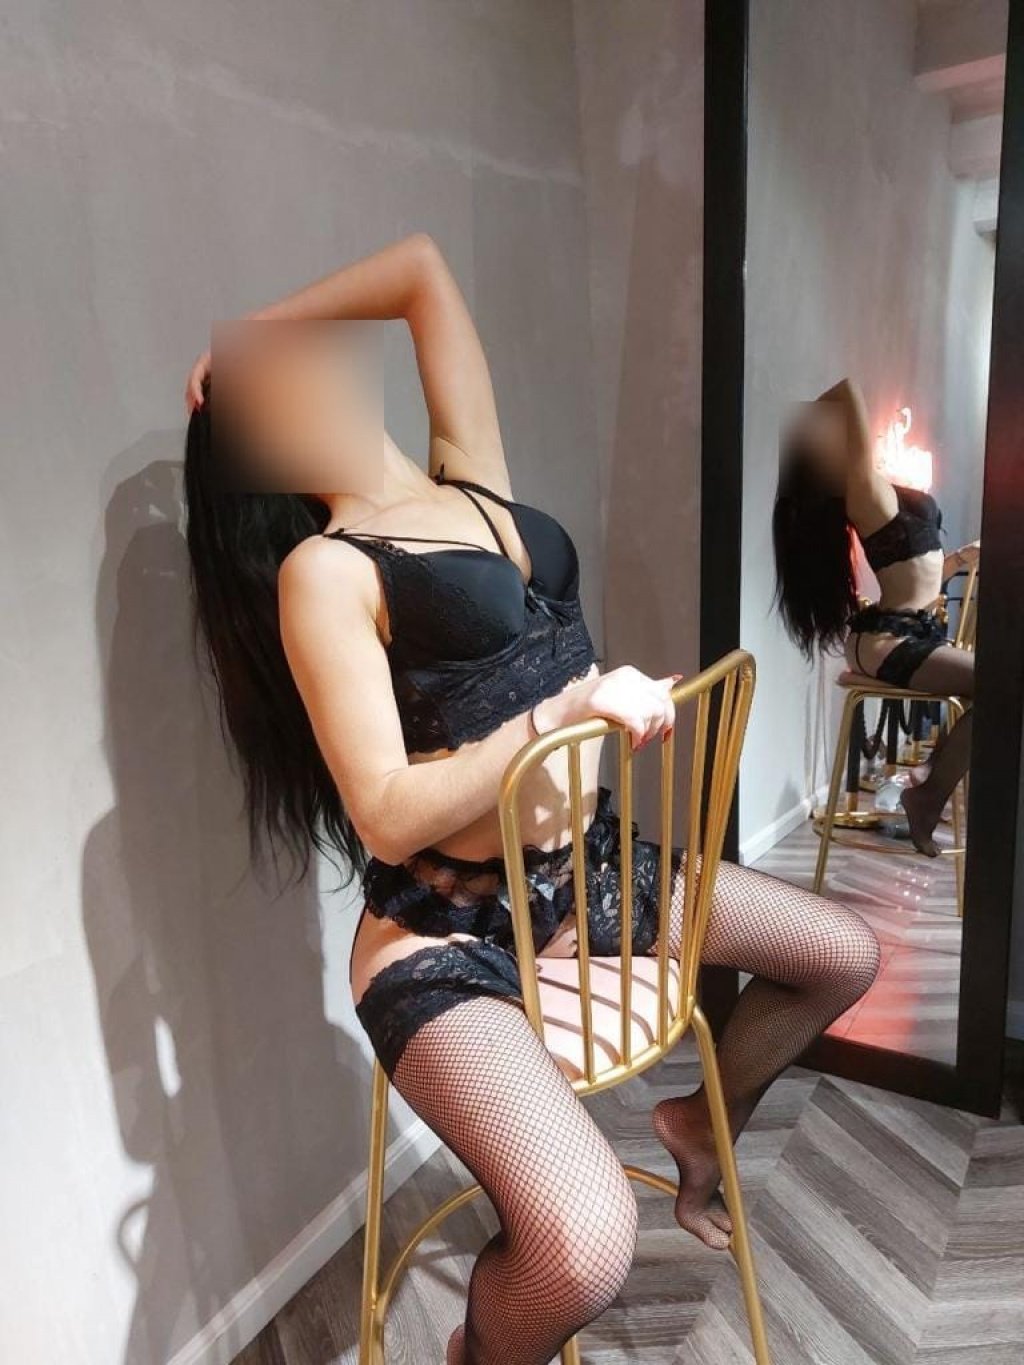 Анжелика: Проститутка-индивидуалка во Владивостоке